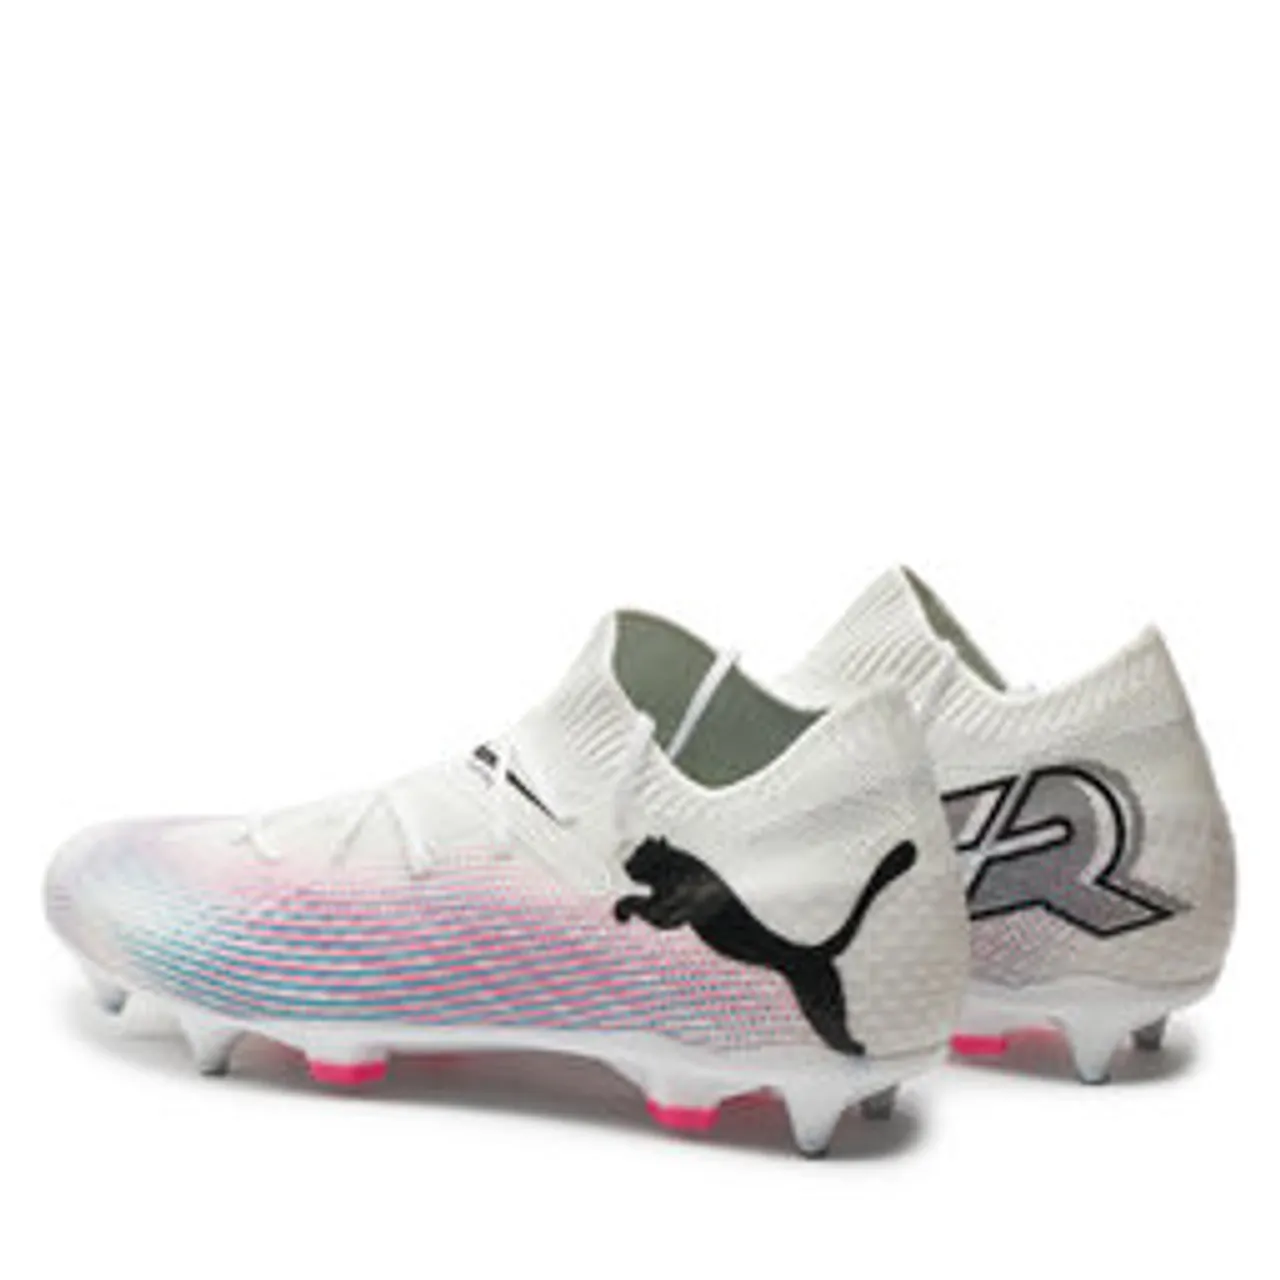 Schuhe Puma Future 7 Pro MxSG 10770601 01 Weiß